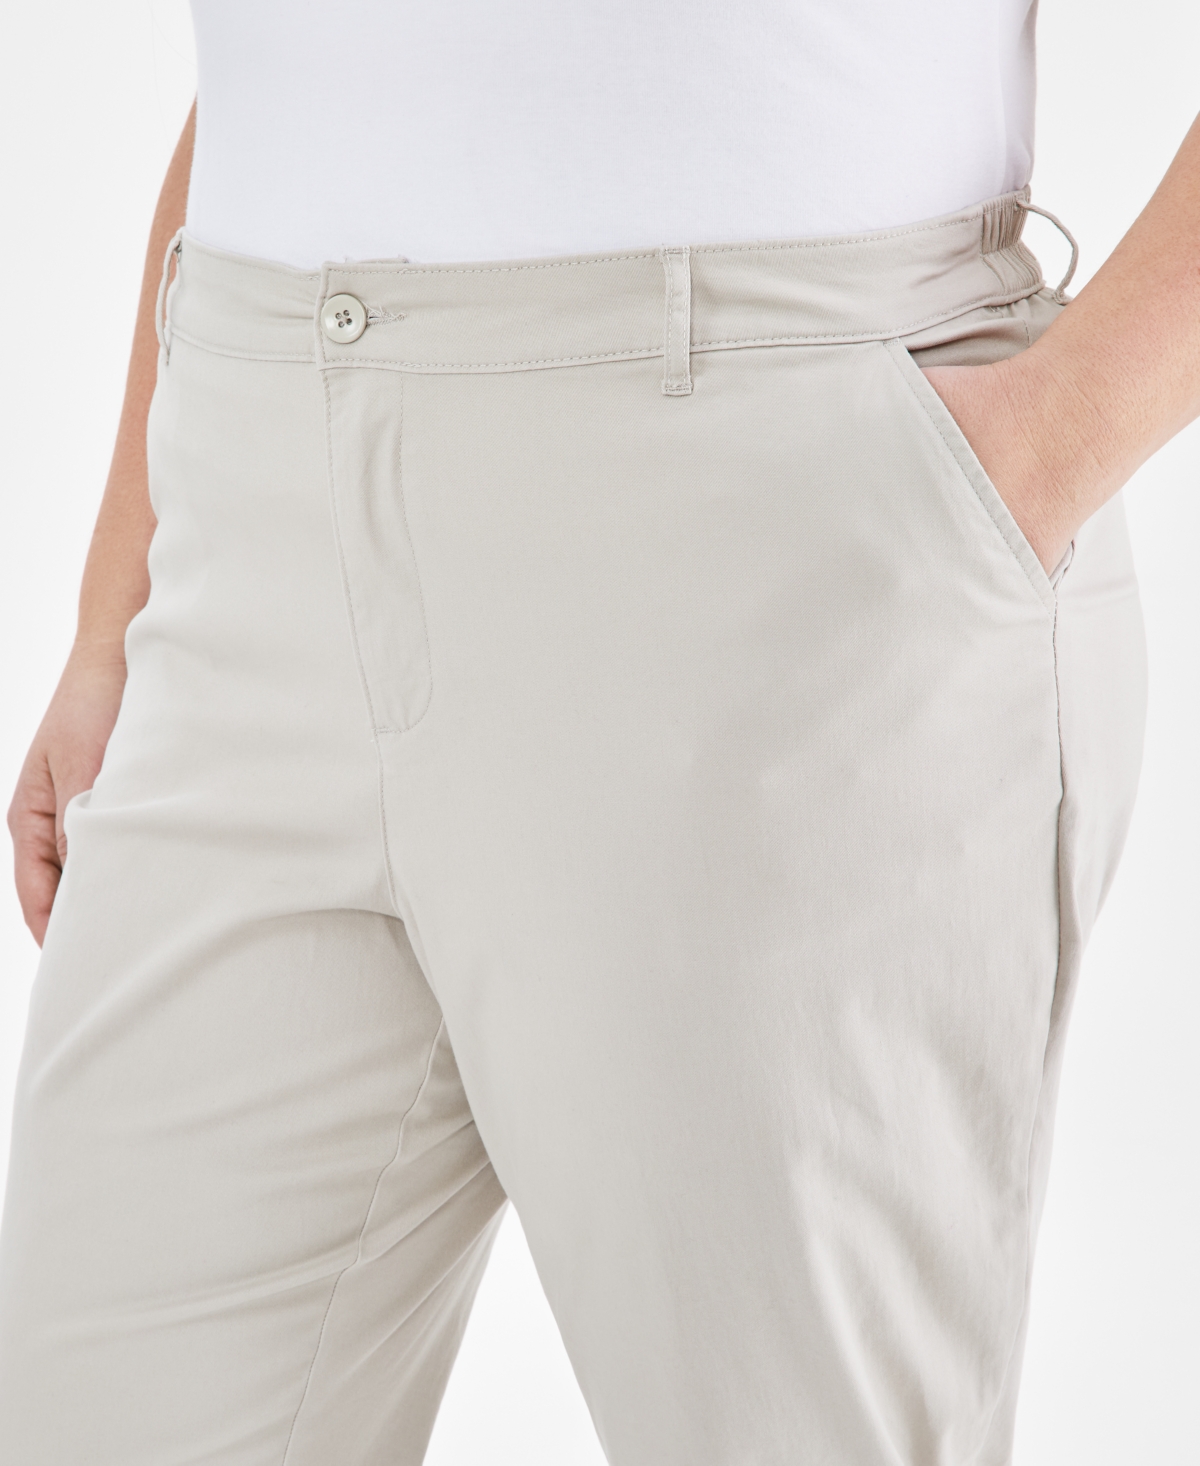 Plus Size Comfort Straight-Leg Capri Pants, Created for Macy's